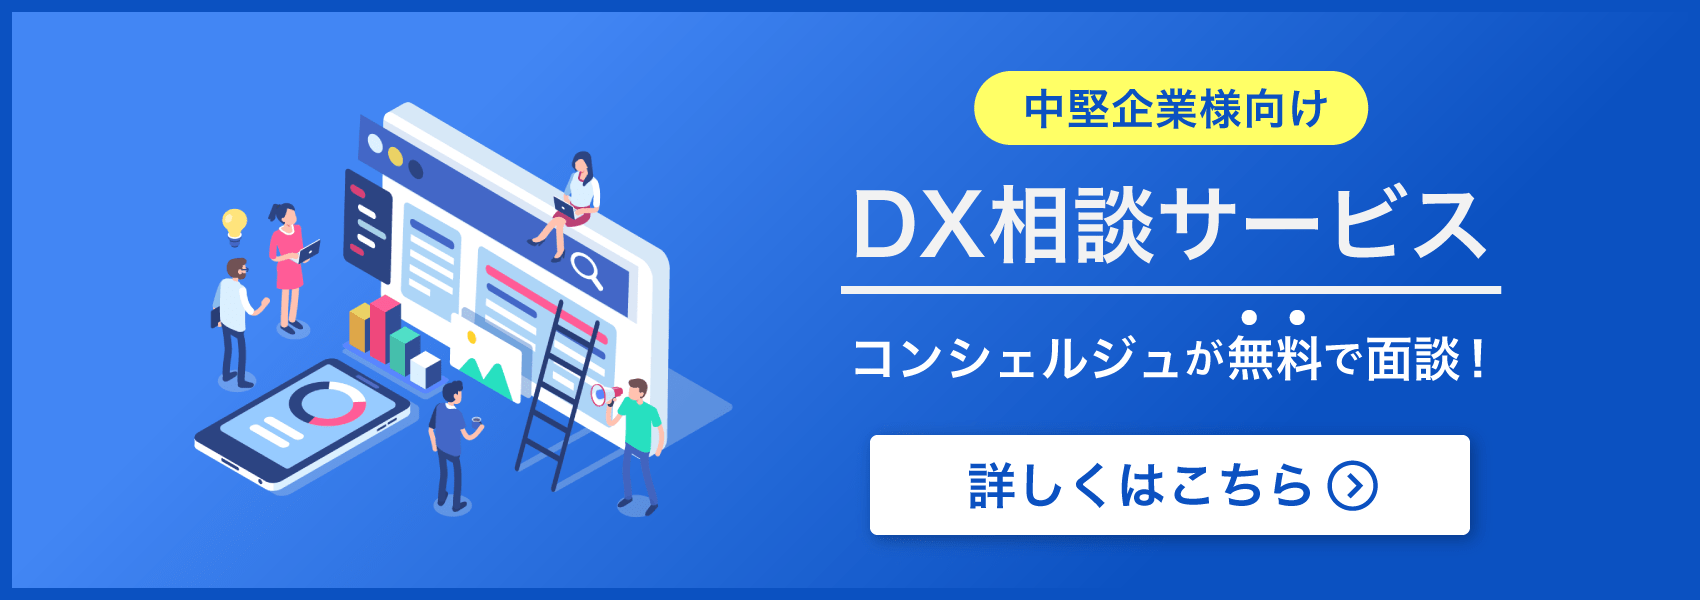 DX相談サービス